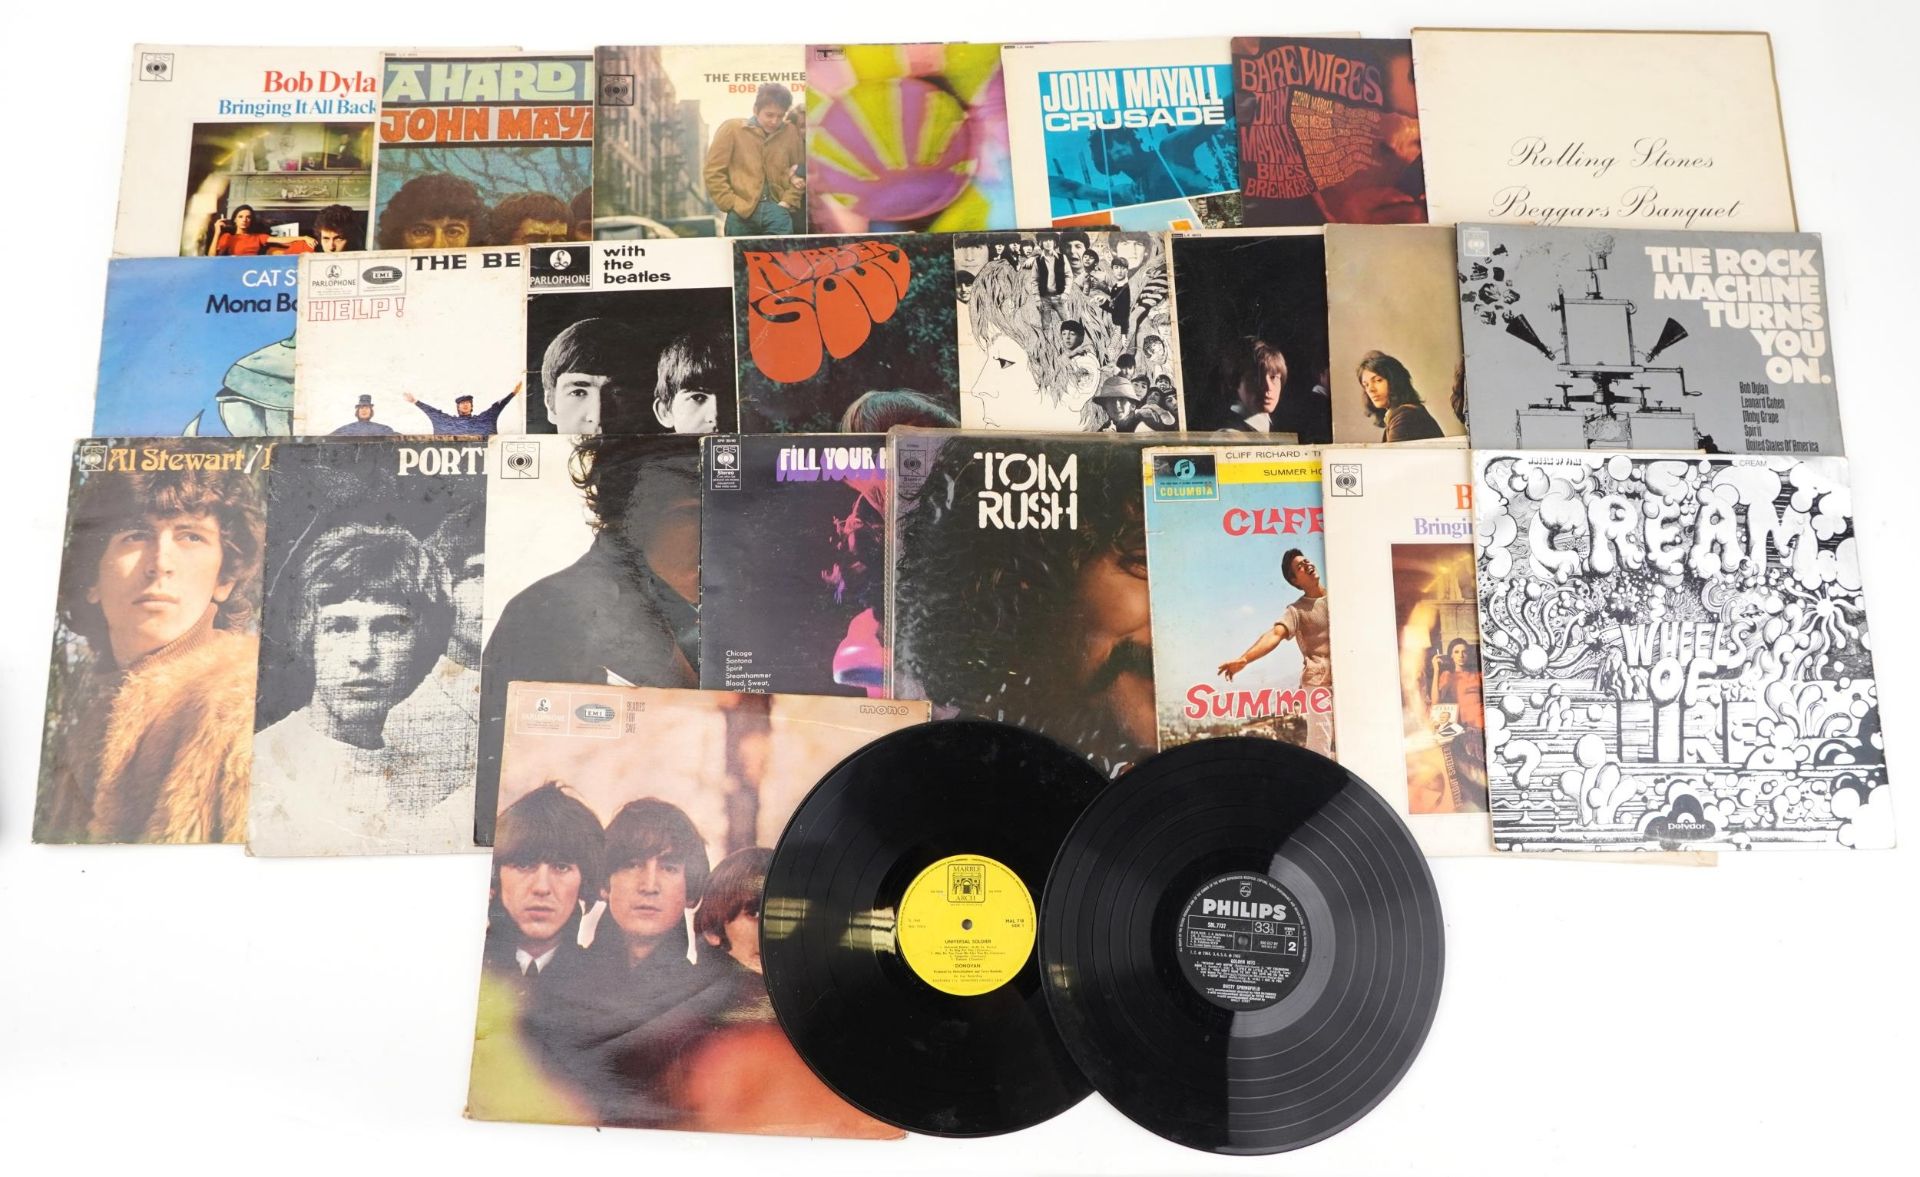 Vinyl LP records including Bob Dylan, John Mayall, The Rolling Stones, Cat Stevens, The Beatles